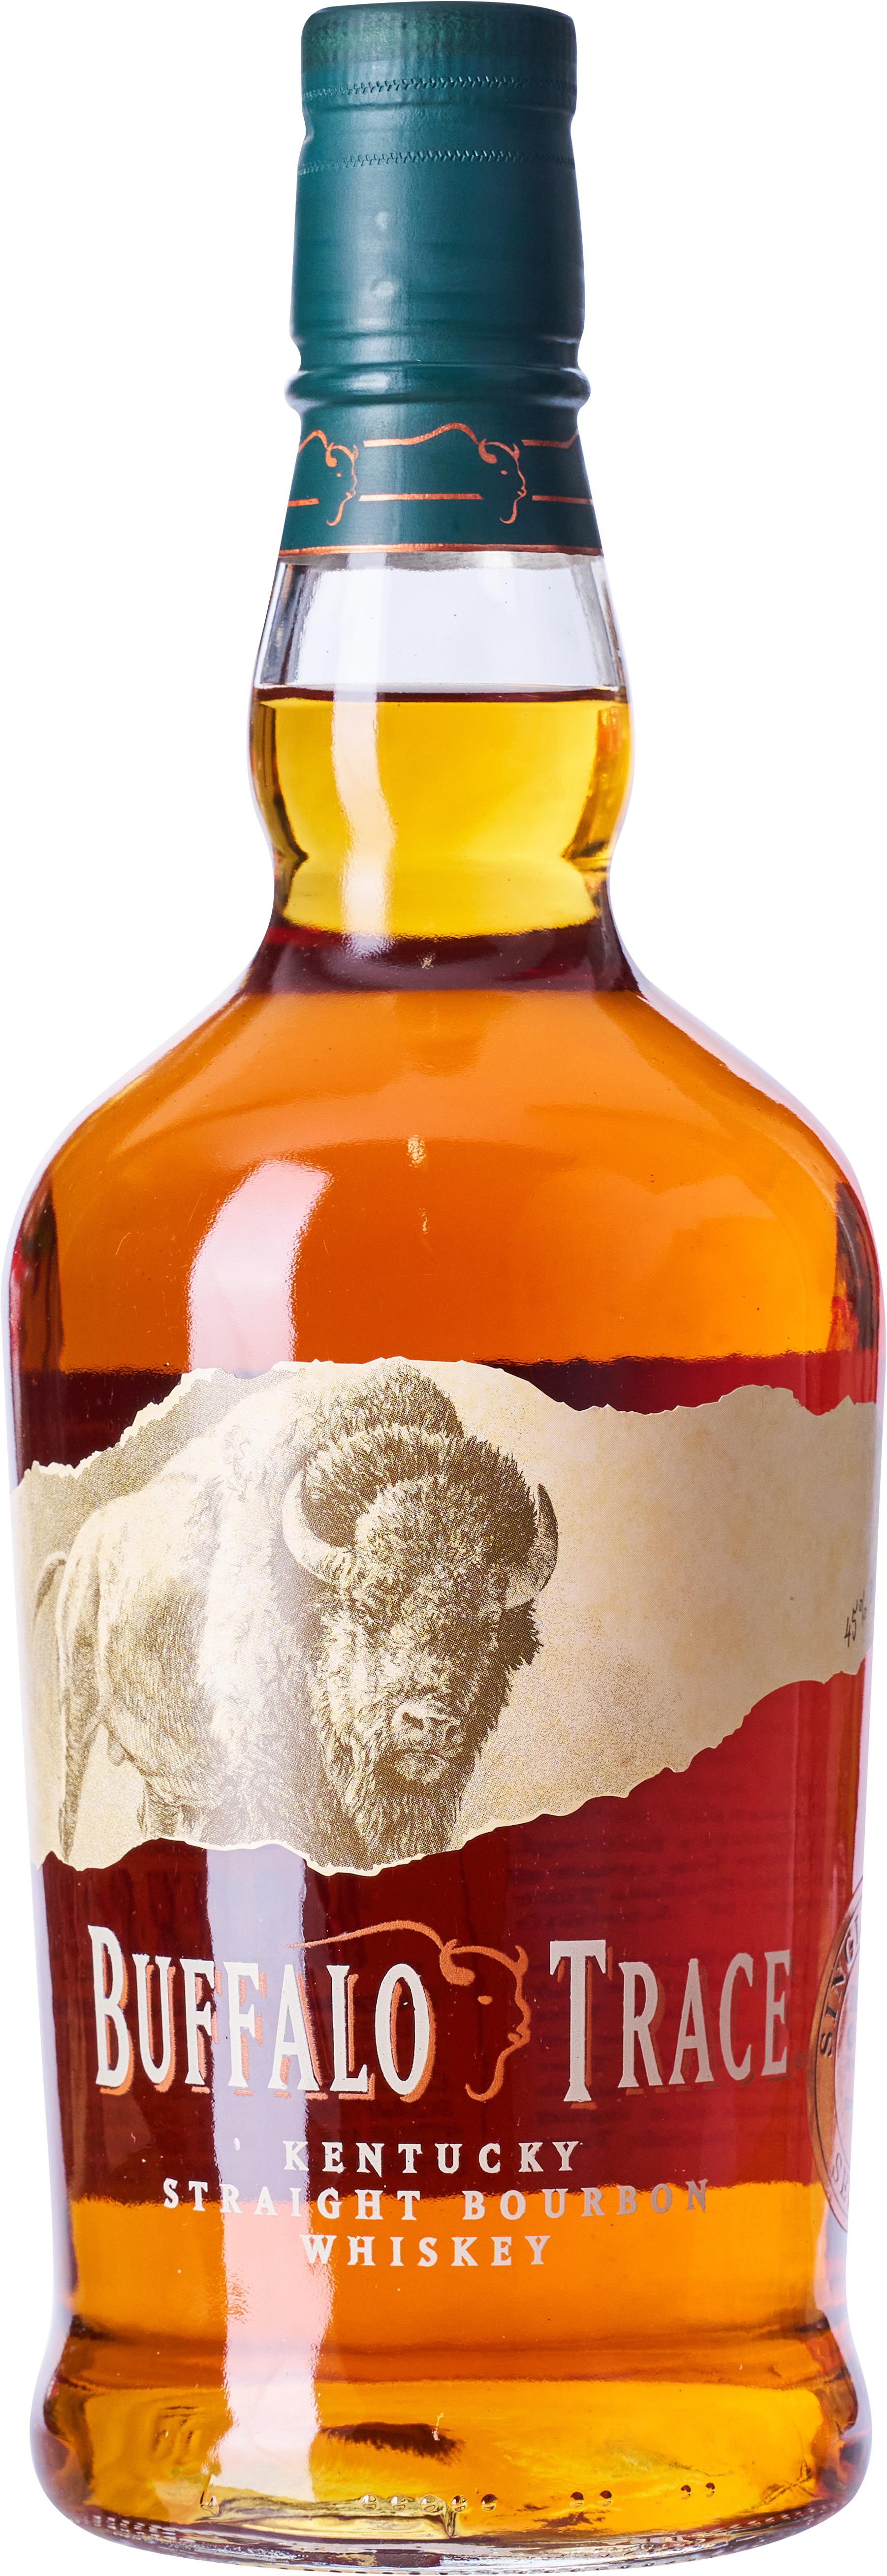 Image of Buffalo Trace 8 Year Old Single Barrel #4 Butterscotch Pudding Bourbon Whiskey 750ml